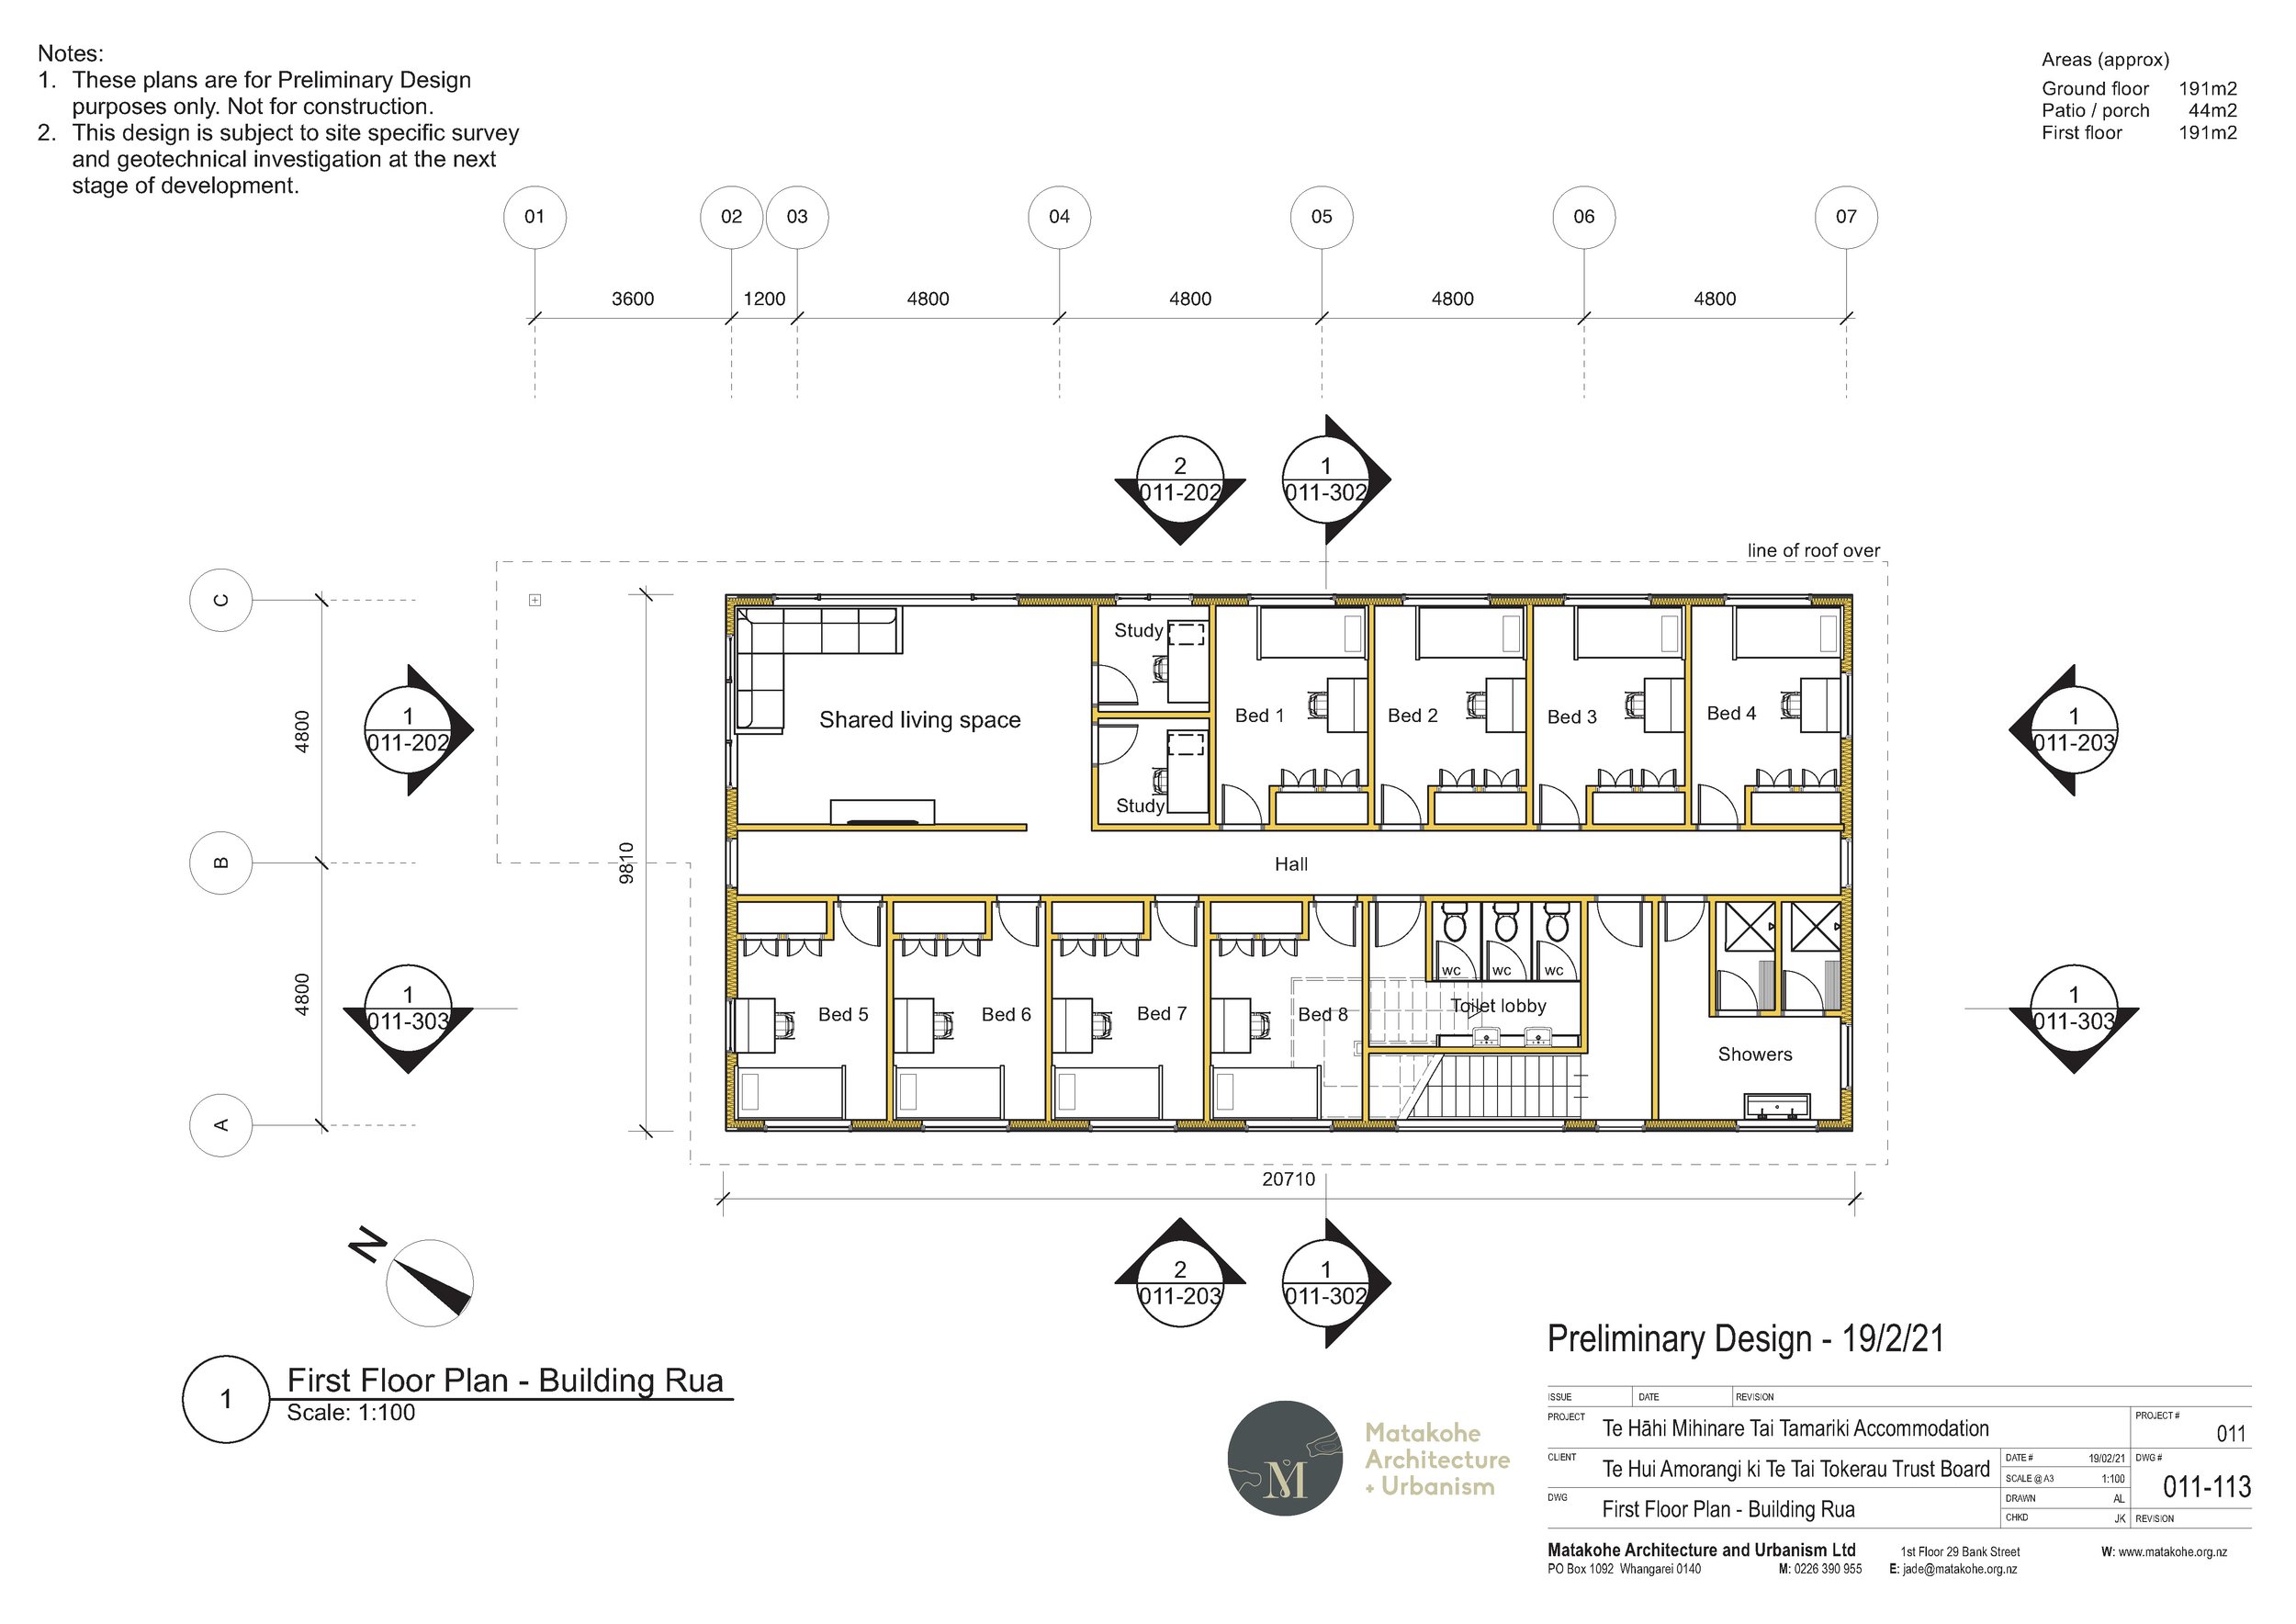 TTA_First Floor Plan - Building Rua.jpg